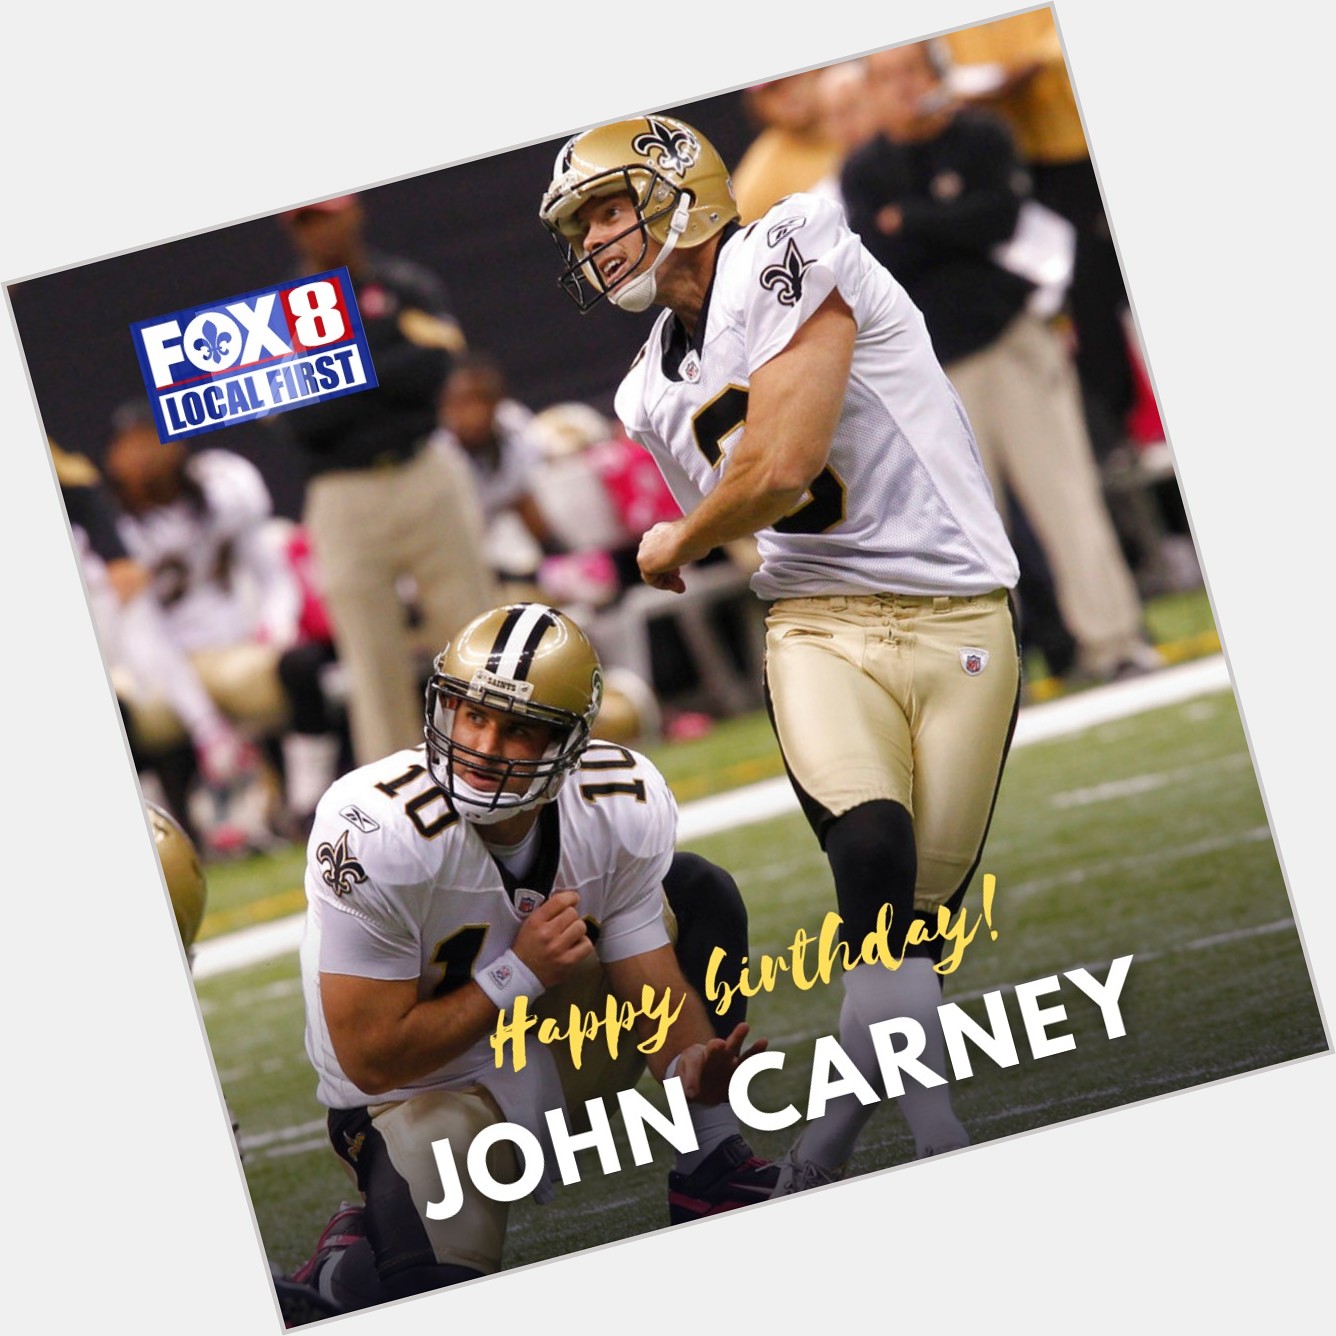 Happy birthday to the former New Orleans Saints kicker, John Carney!! 